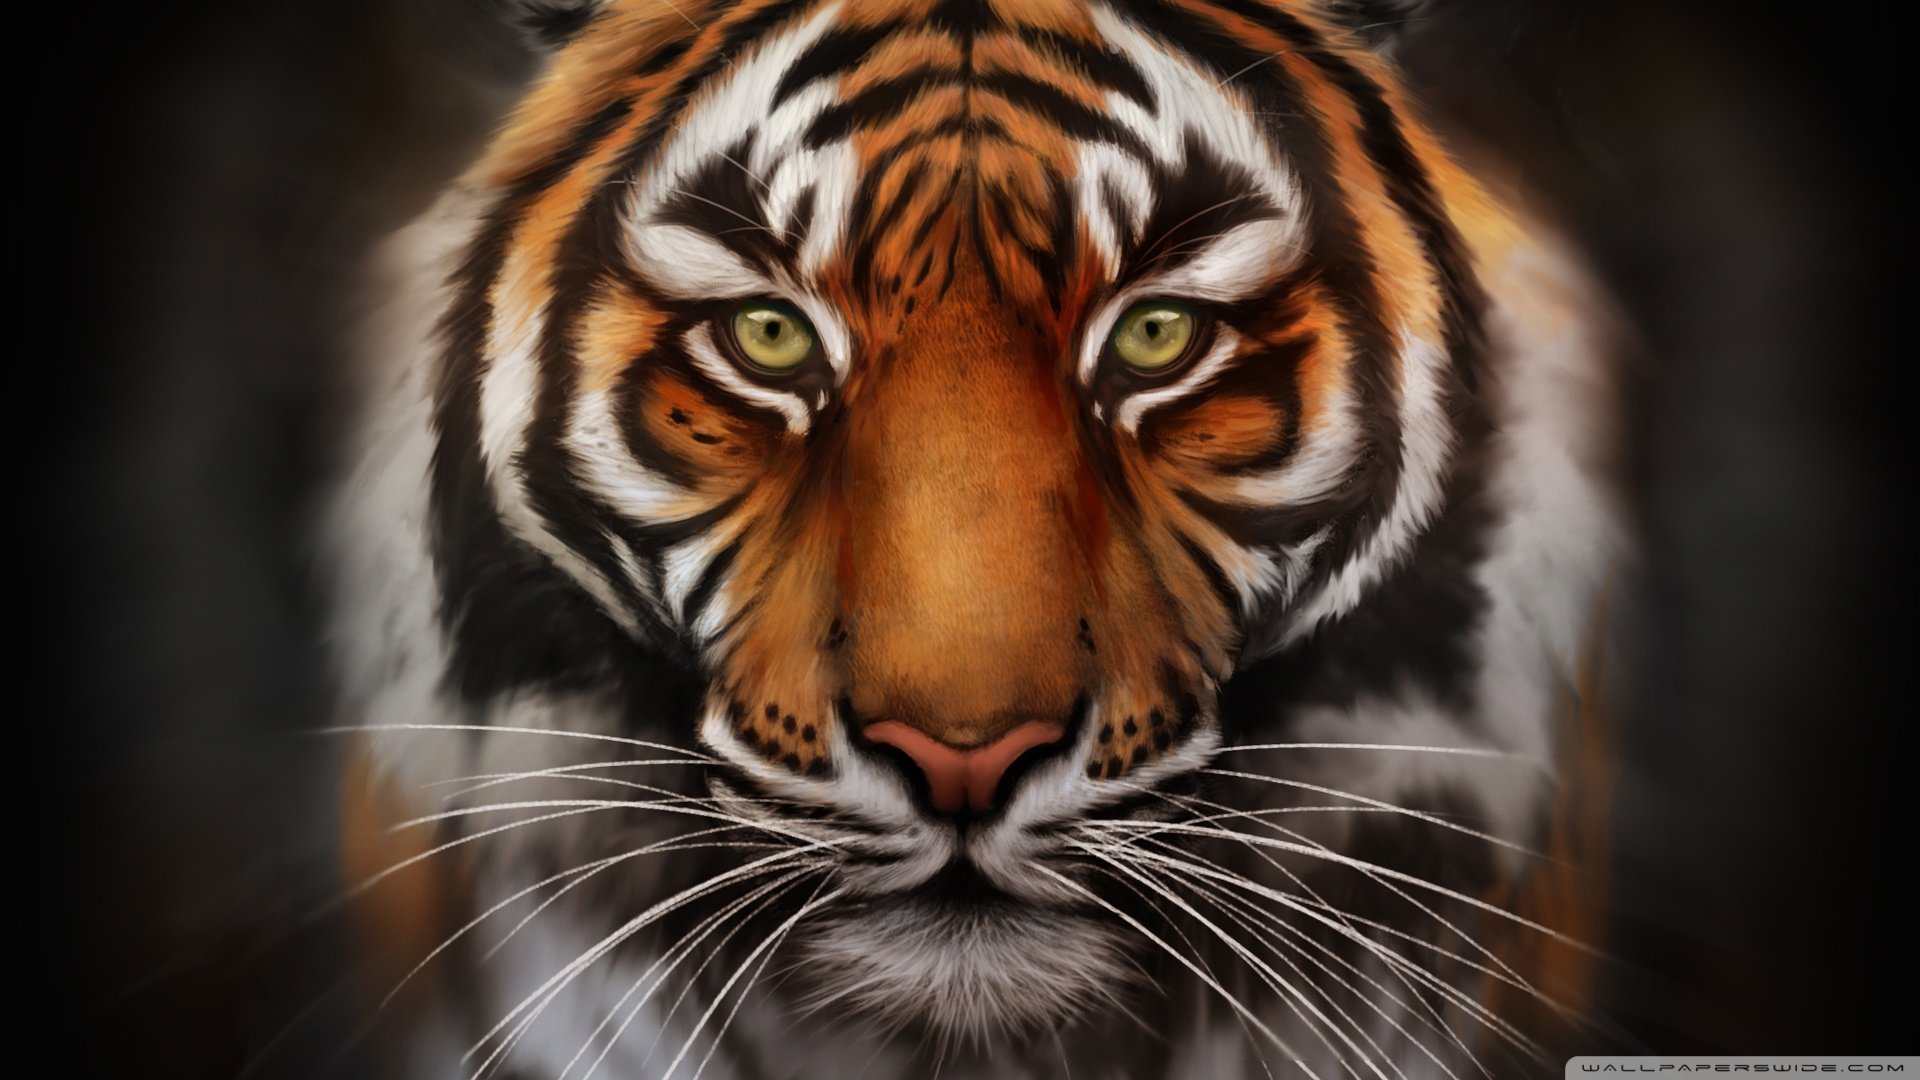 Save the tiger wallpaper 1920x1080 wallpaper 1920x1080 238461 1920x1080